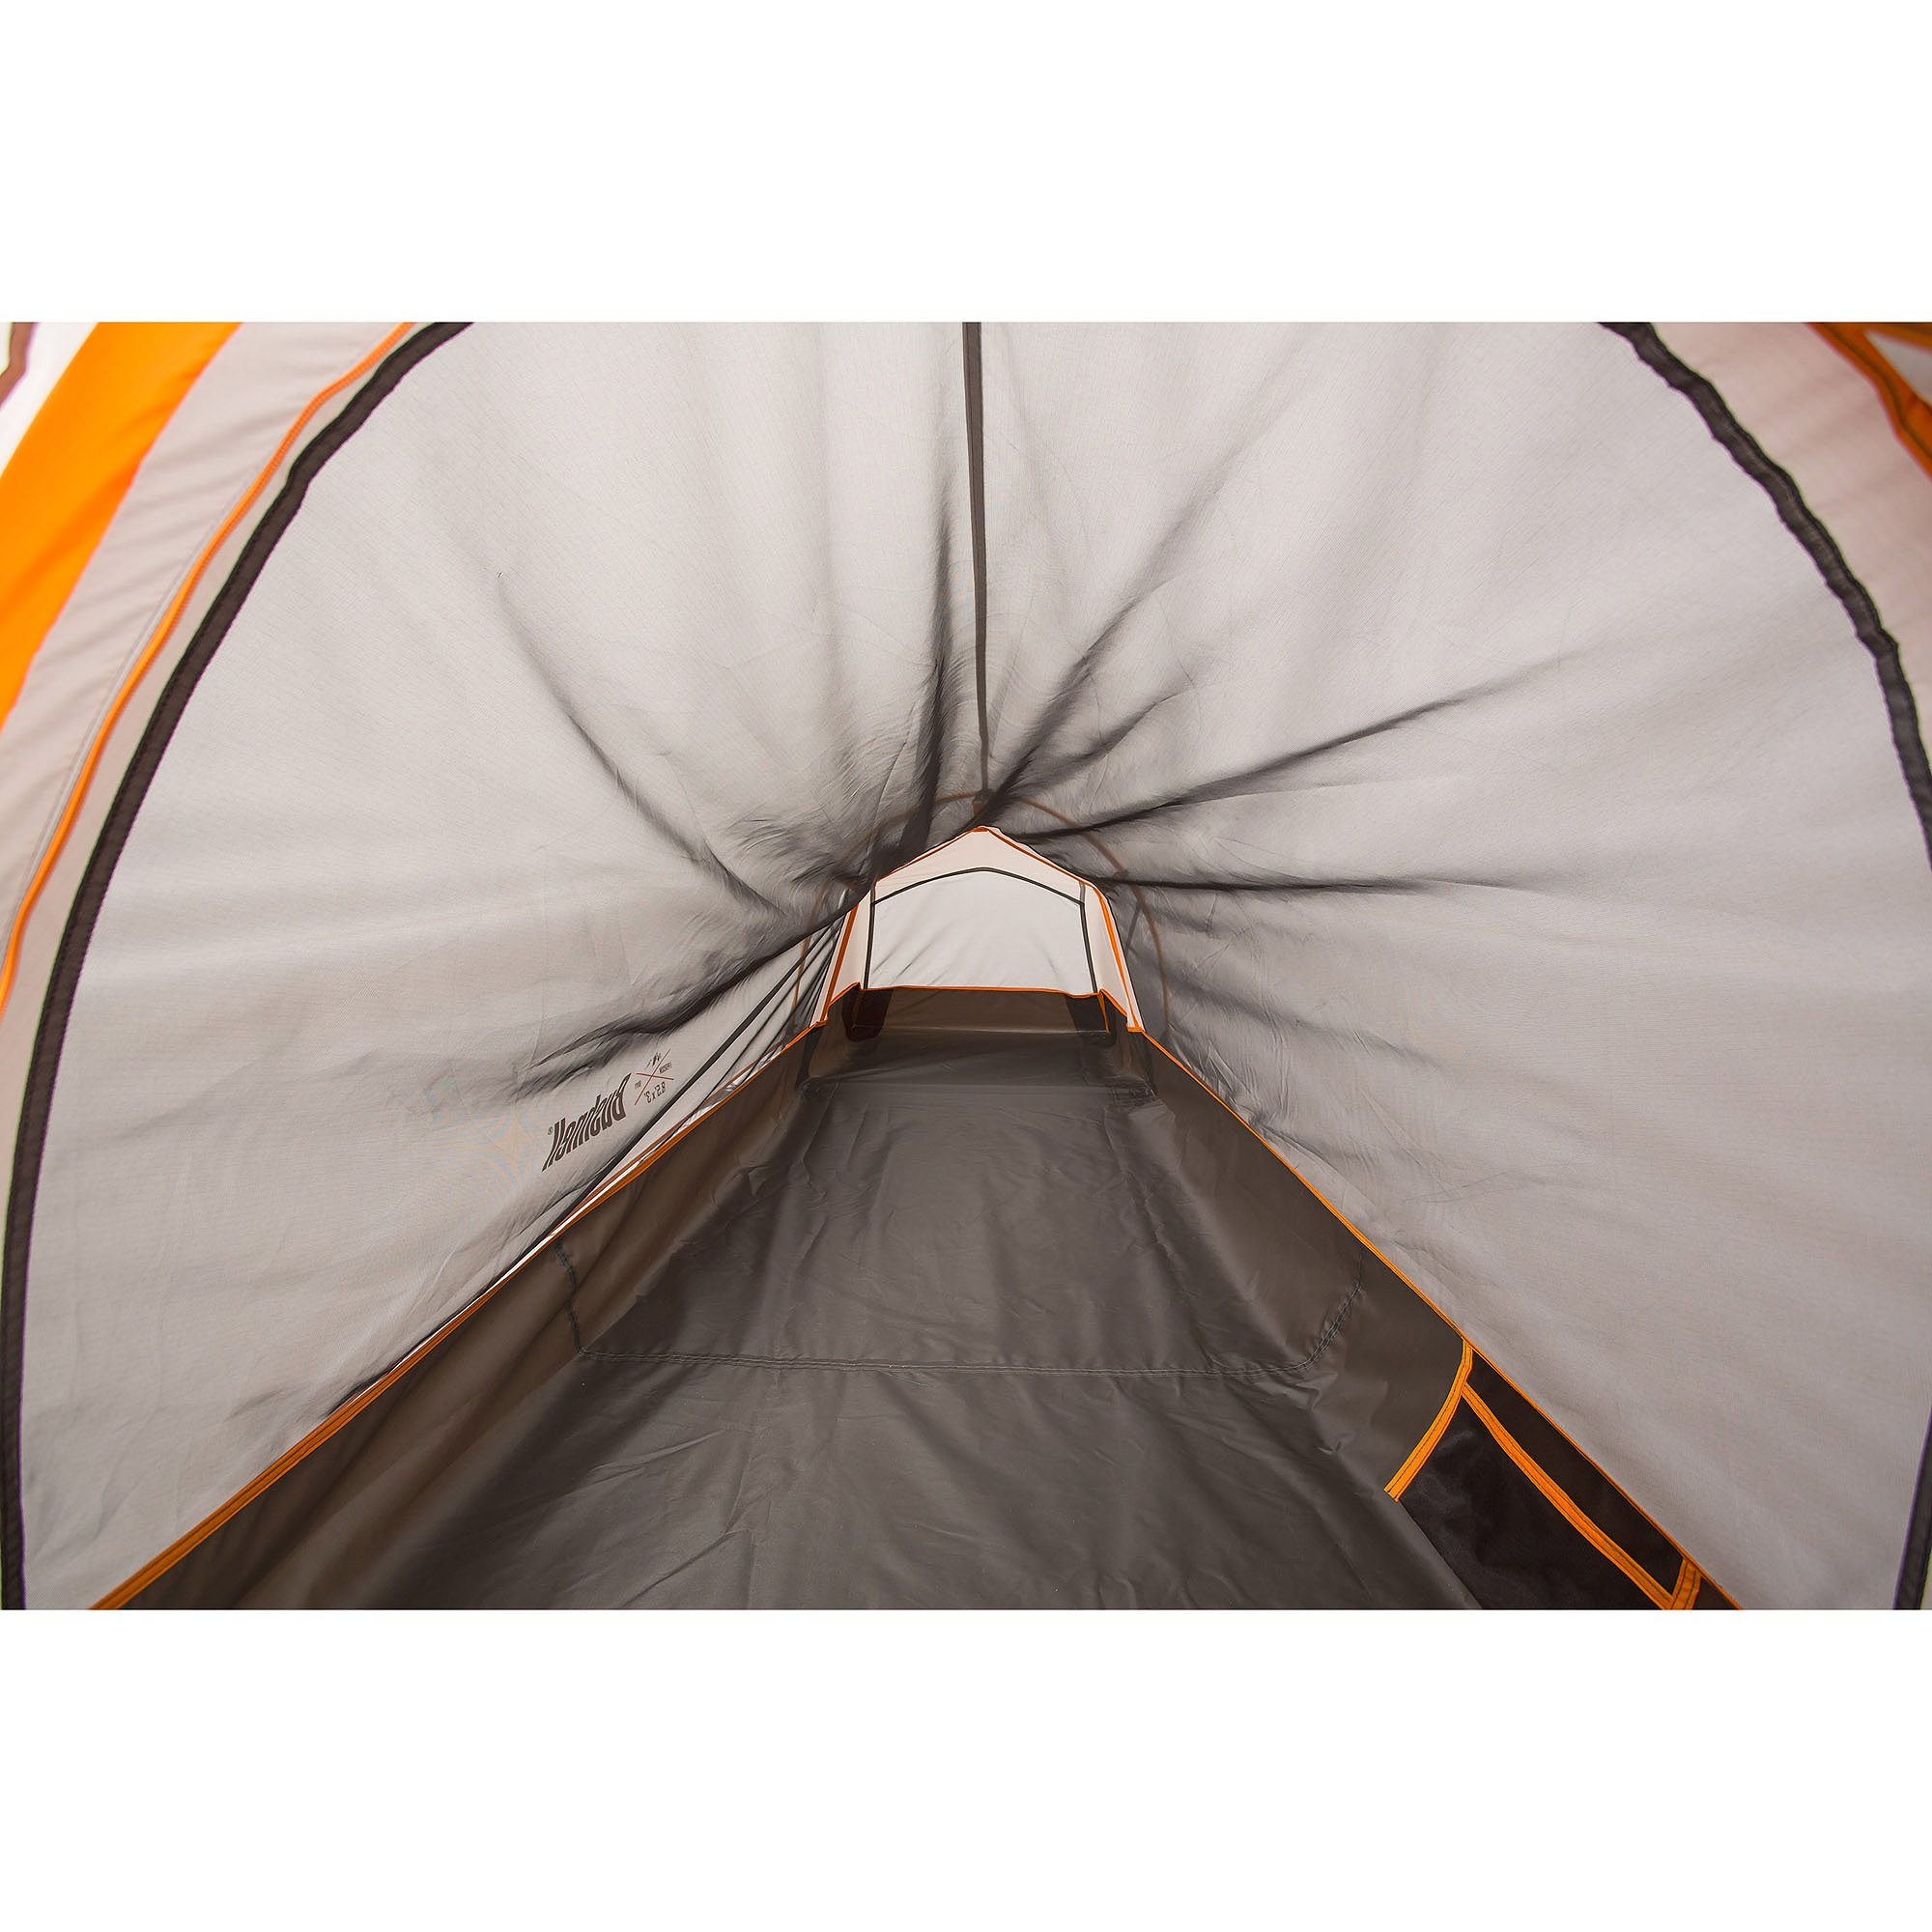 Bushnell Roam Series 8.5' x 3' Backpacking Tent, Sleeps 1 - image 4 of 6